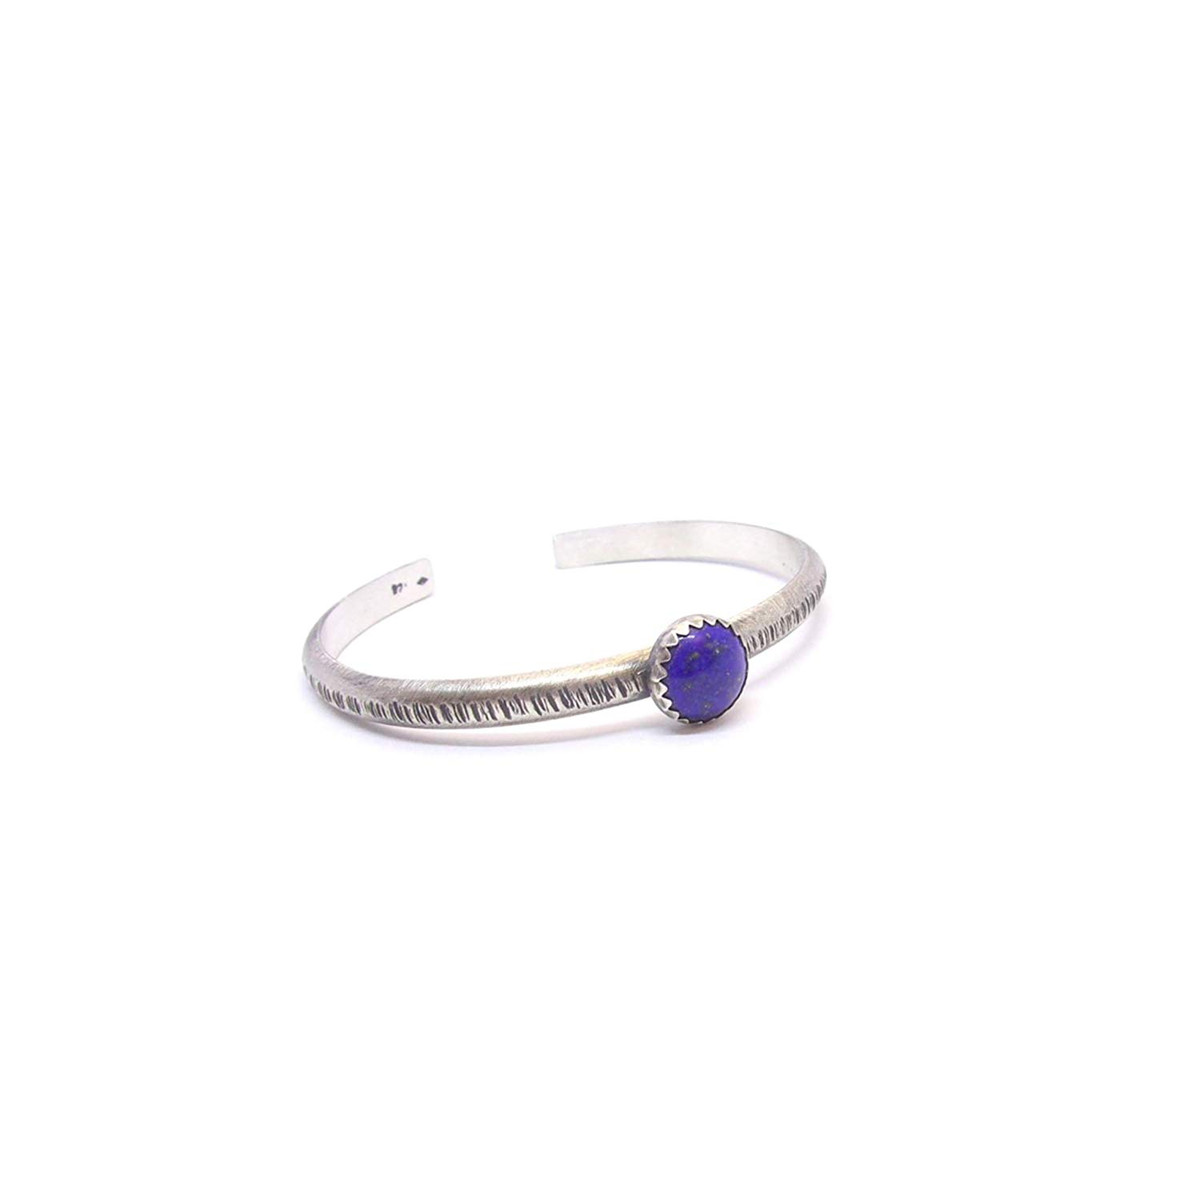 Bracelet Ethnique Lapis-Lazuli - vue 2